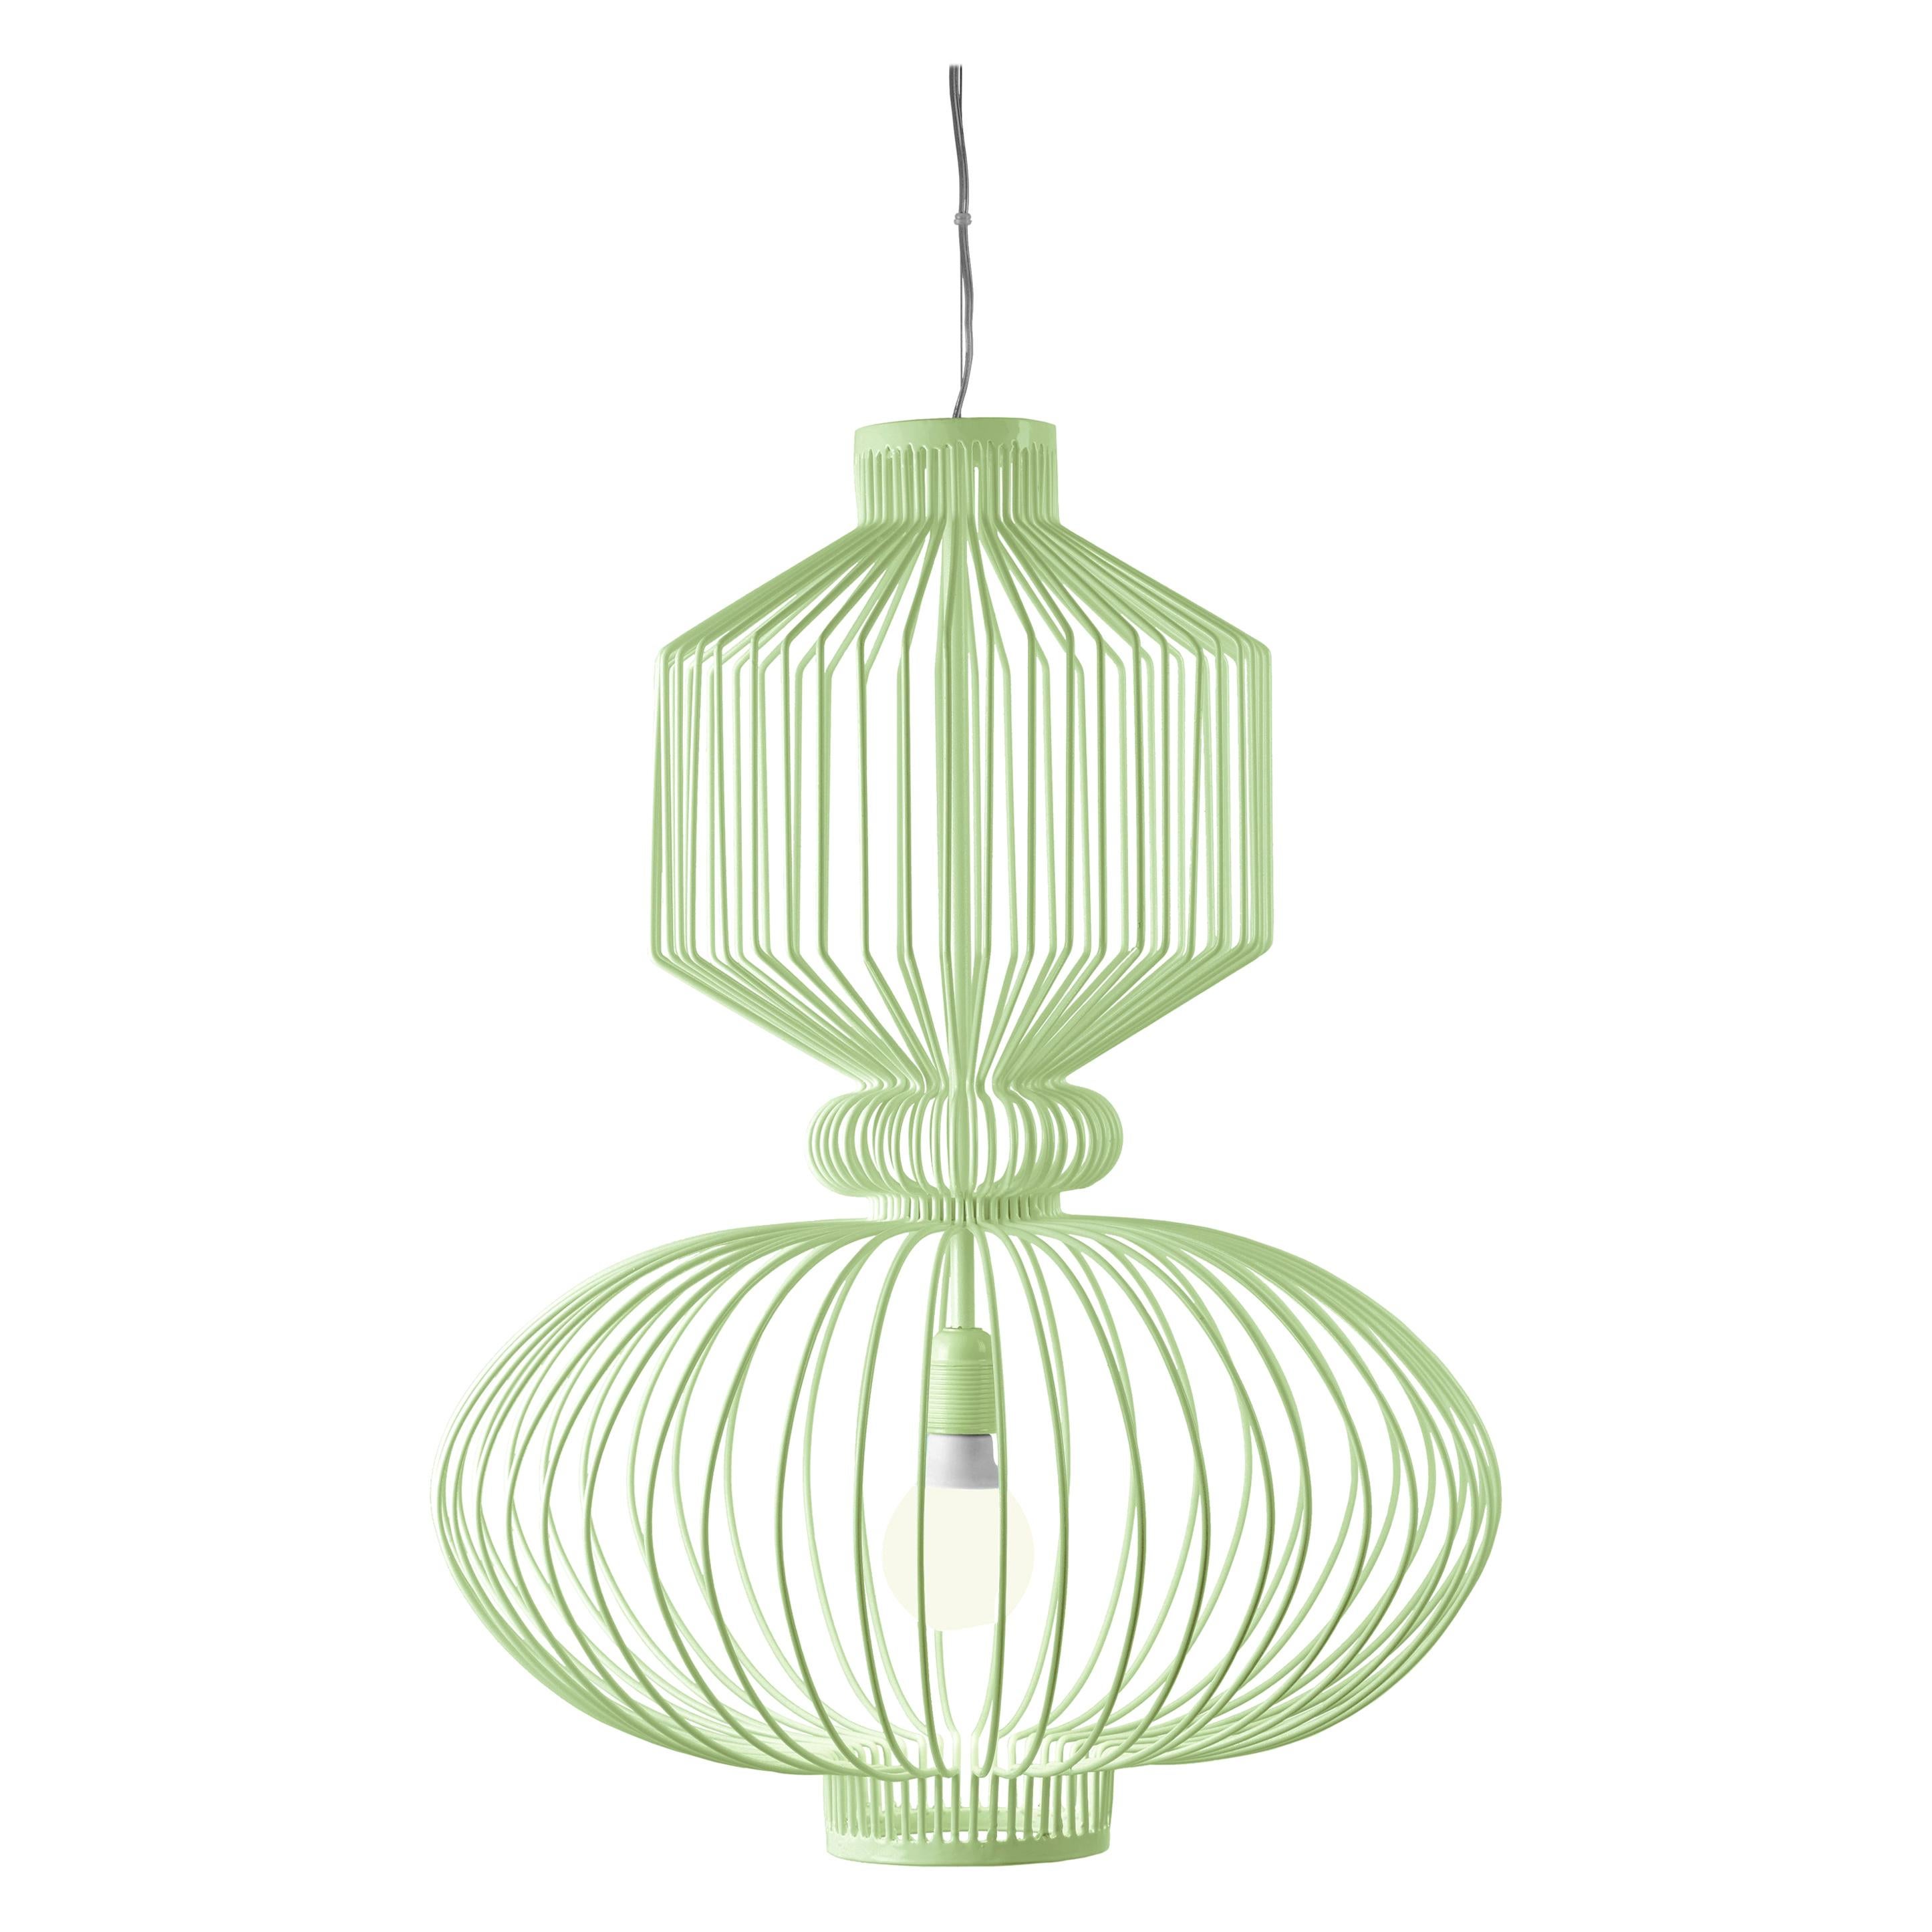 Art Deco, Industrial Dream Green Pendant Revolution Suspension Lamp